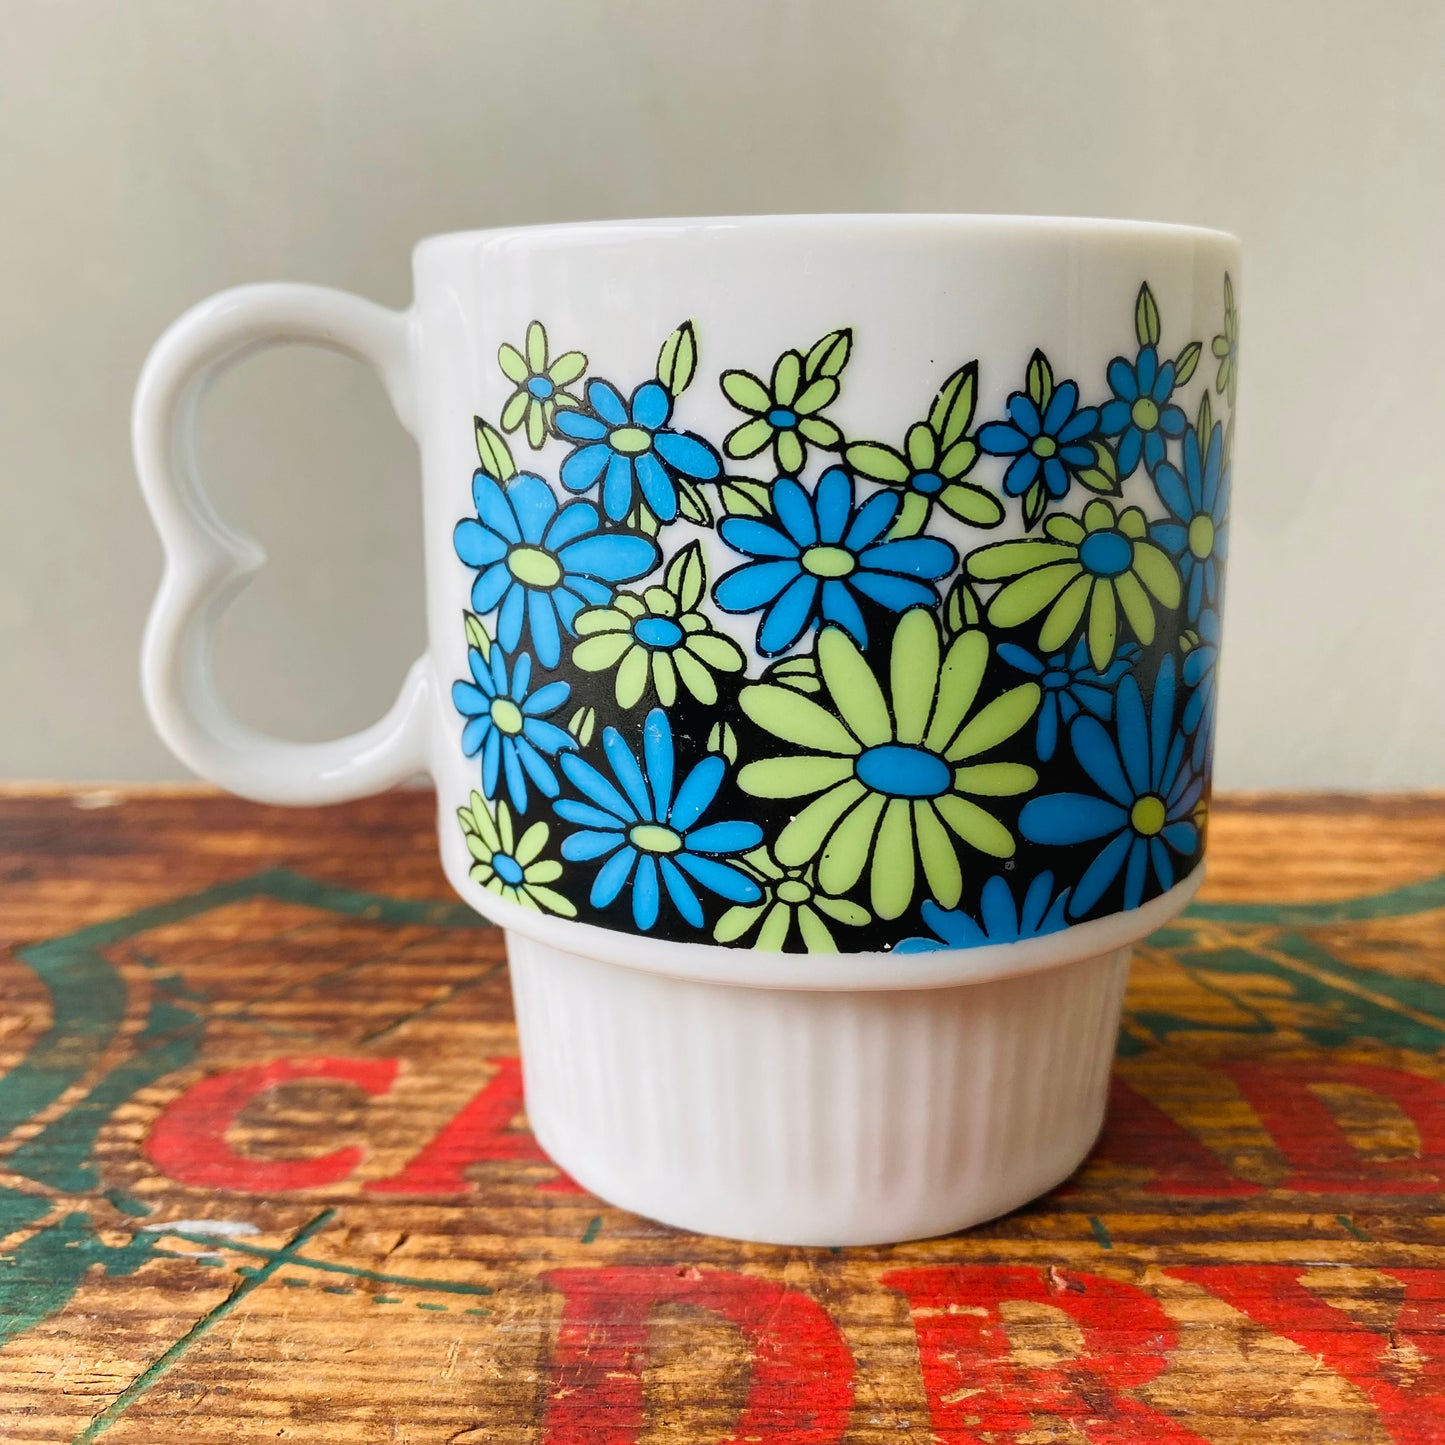 【1970s vintage】JAPAN flower mug